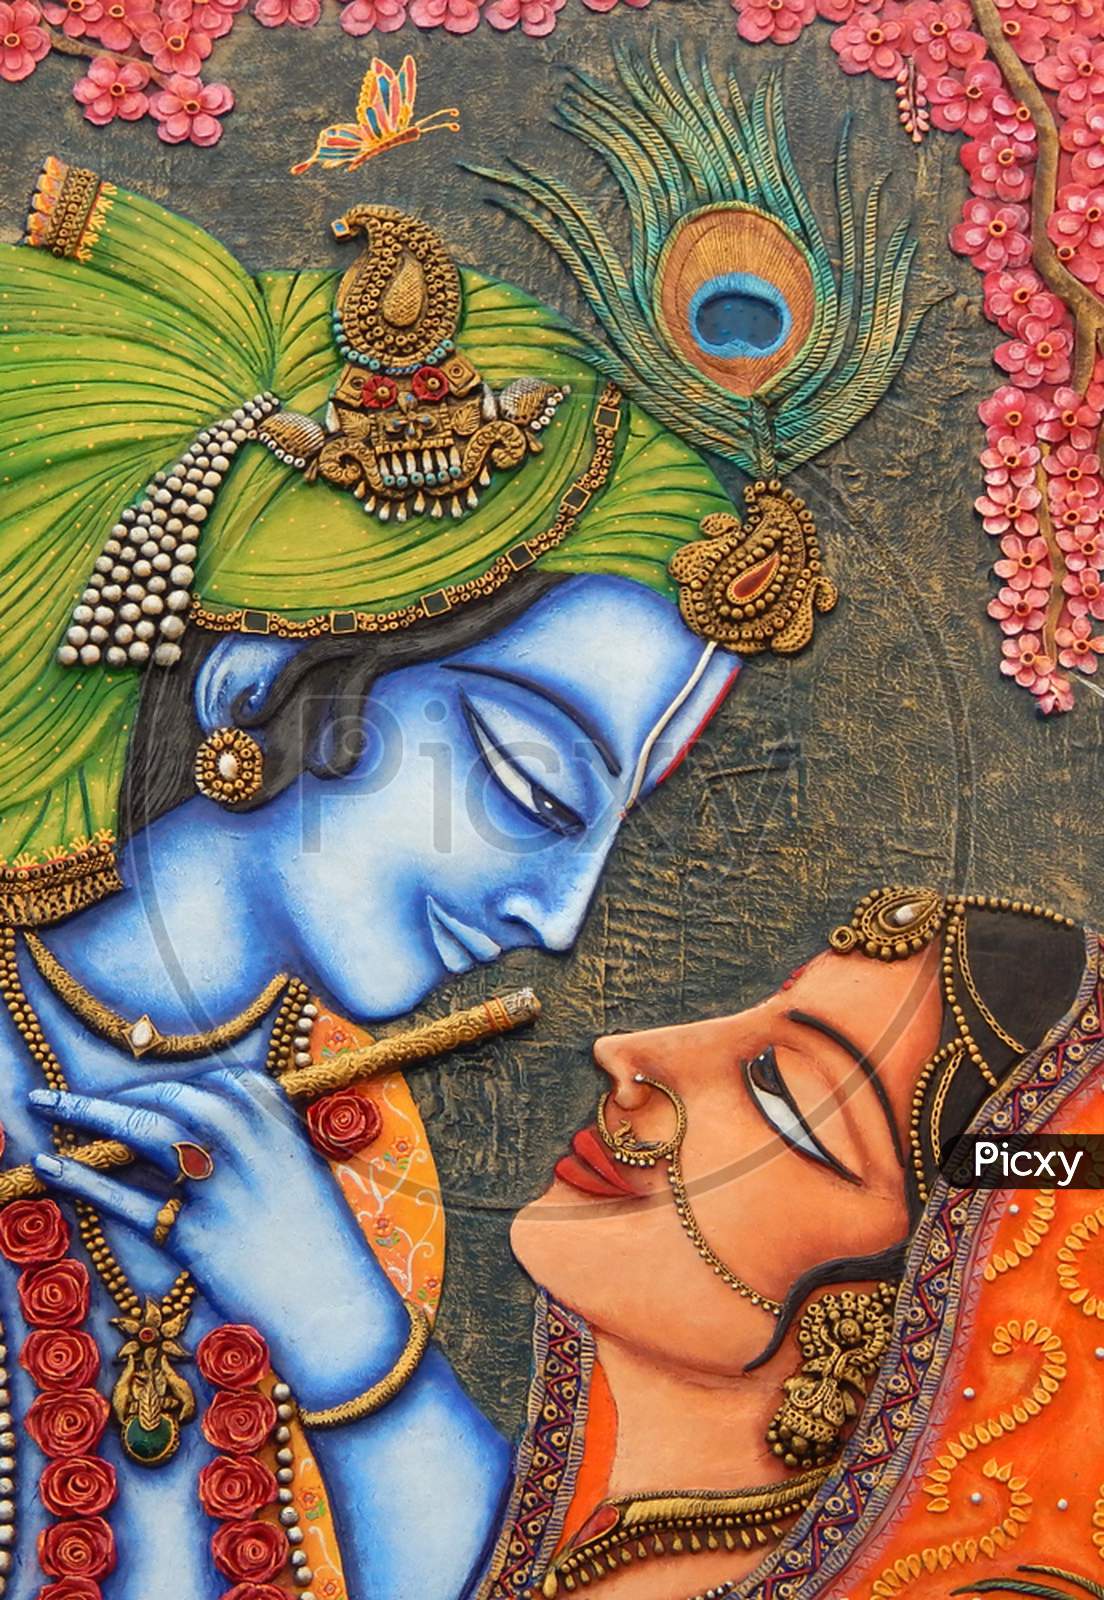 Lord Radha Krishna artwork